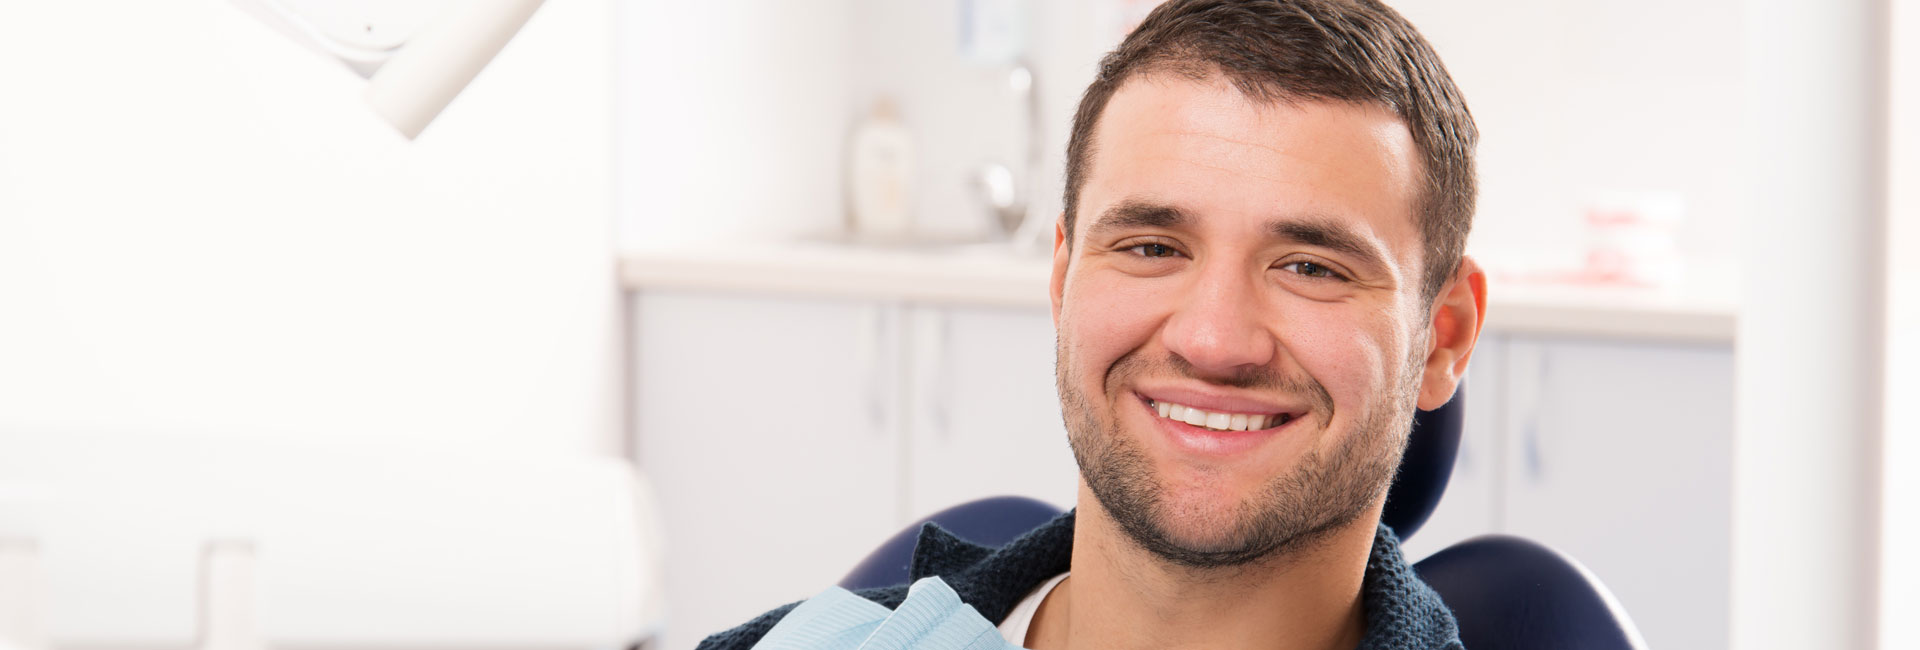 Happy man after having dental implant treatment